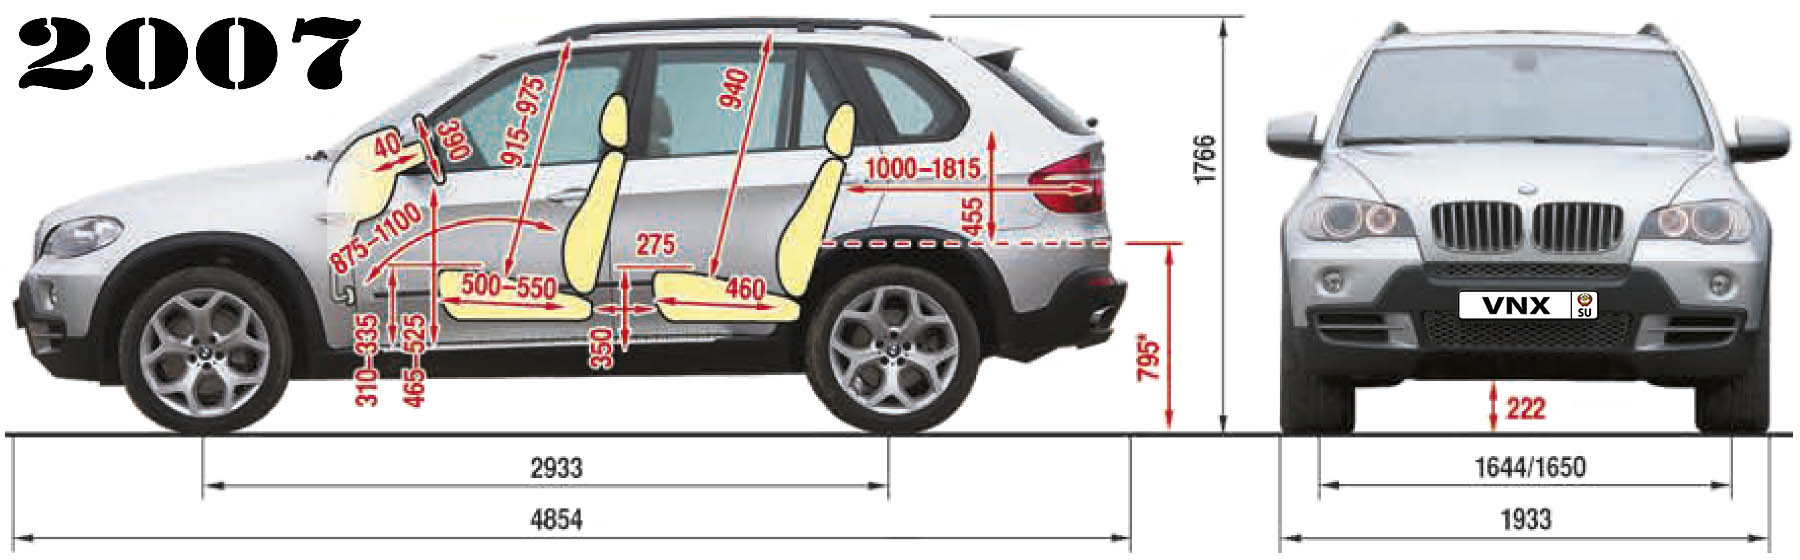 Габаритные размеры БМВ Икс 5 2007 (dimensions BMW X5 E70)